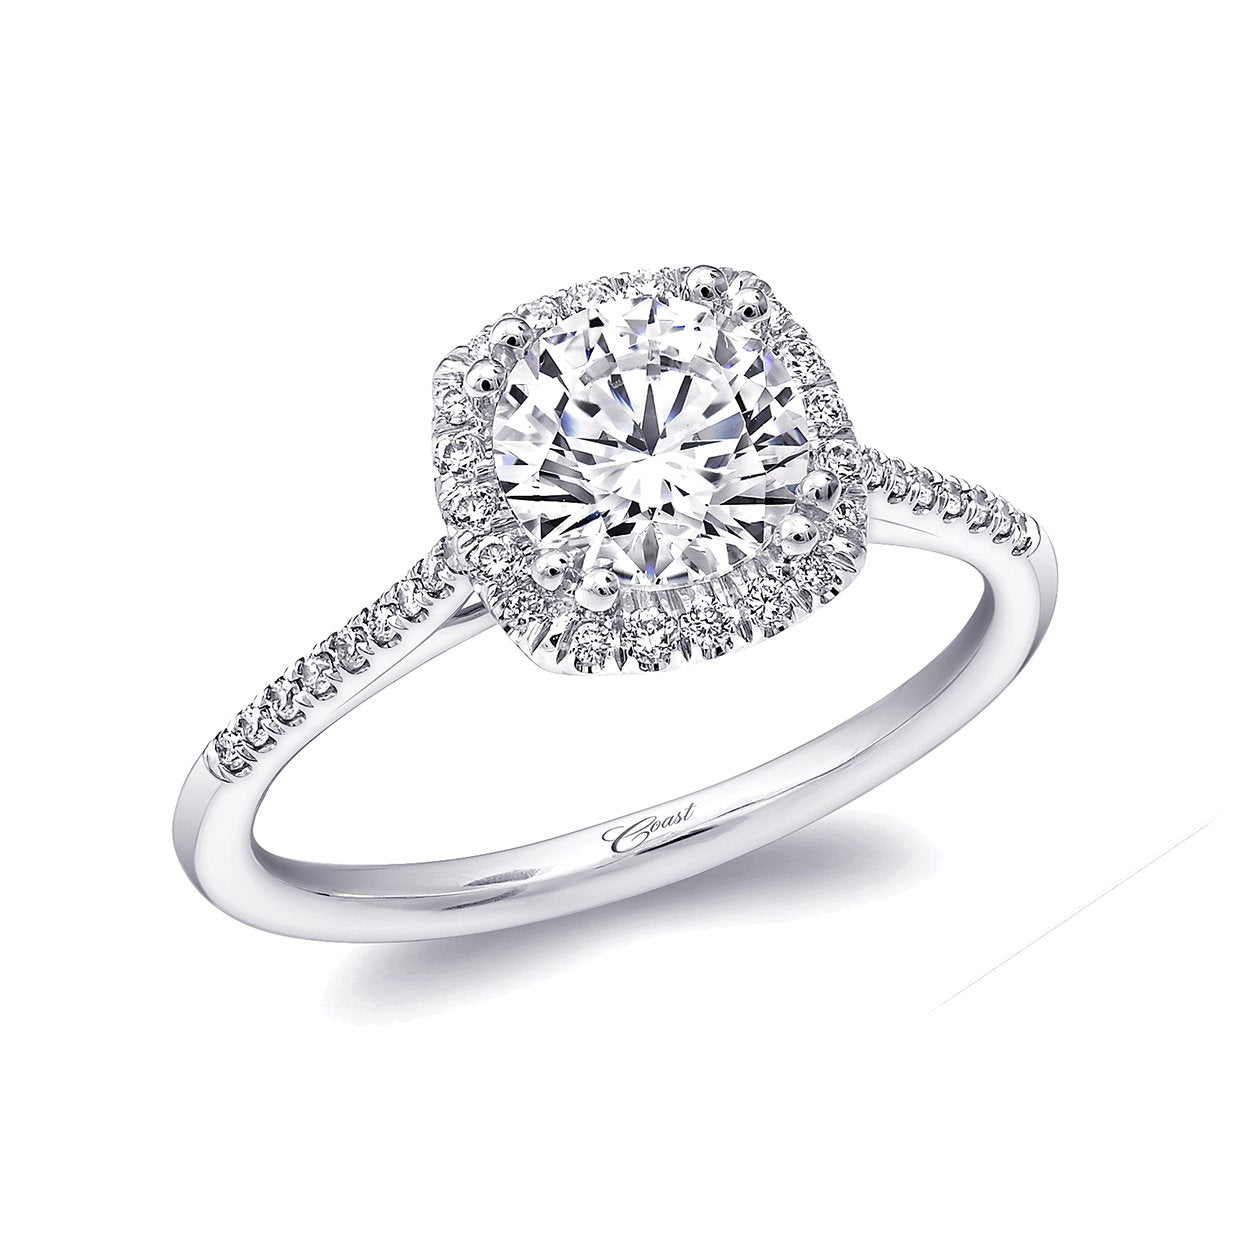 white gold halo cushion cut engagement ring lc5410 coast diamond